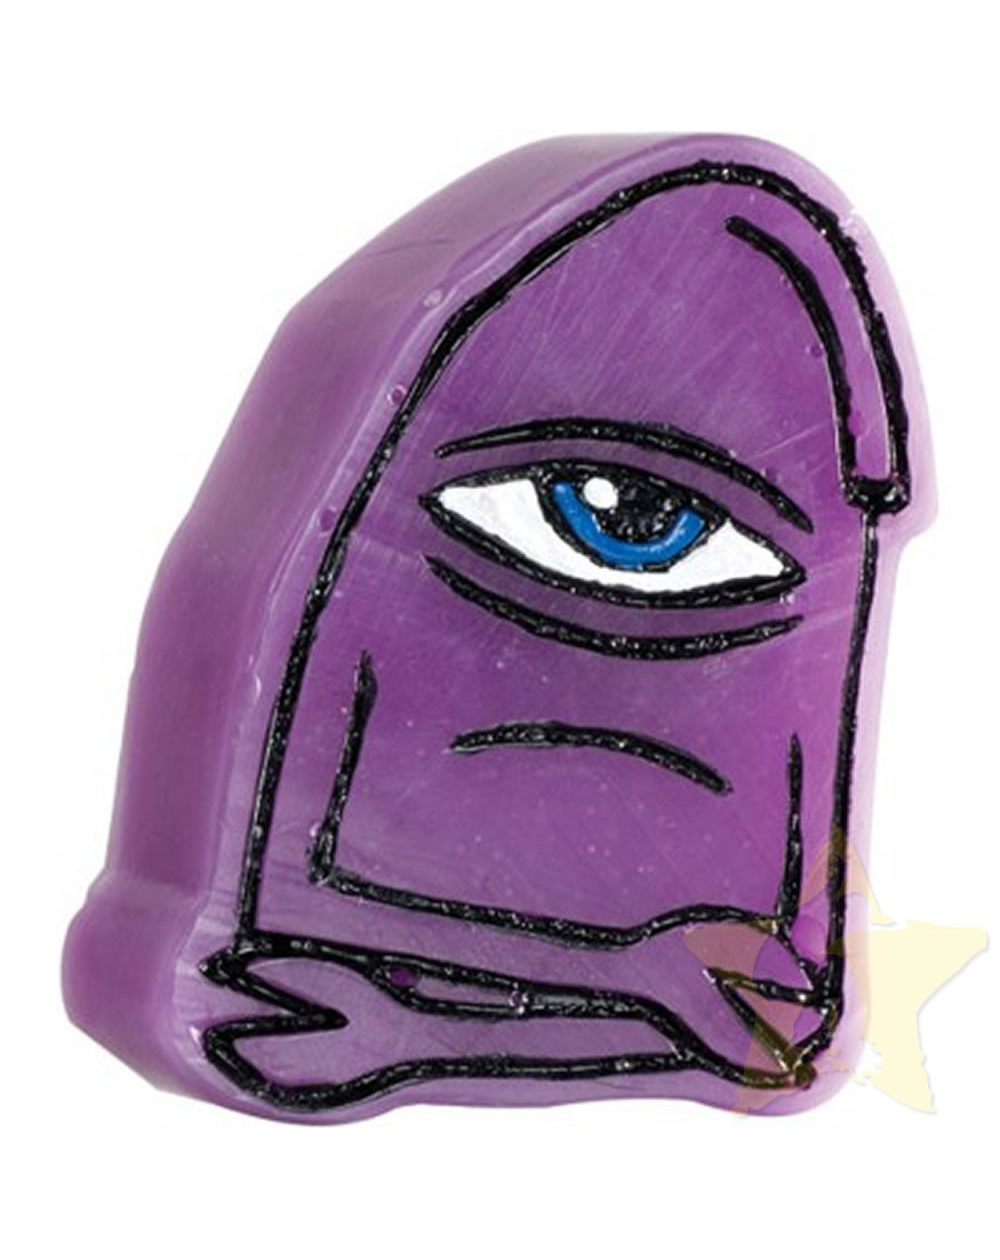 Toy Machine Cera Skateboard Sect Wax Purple